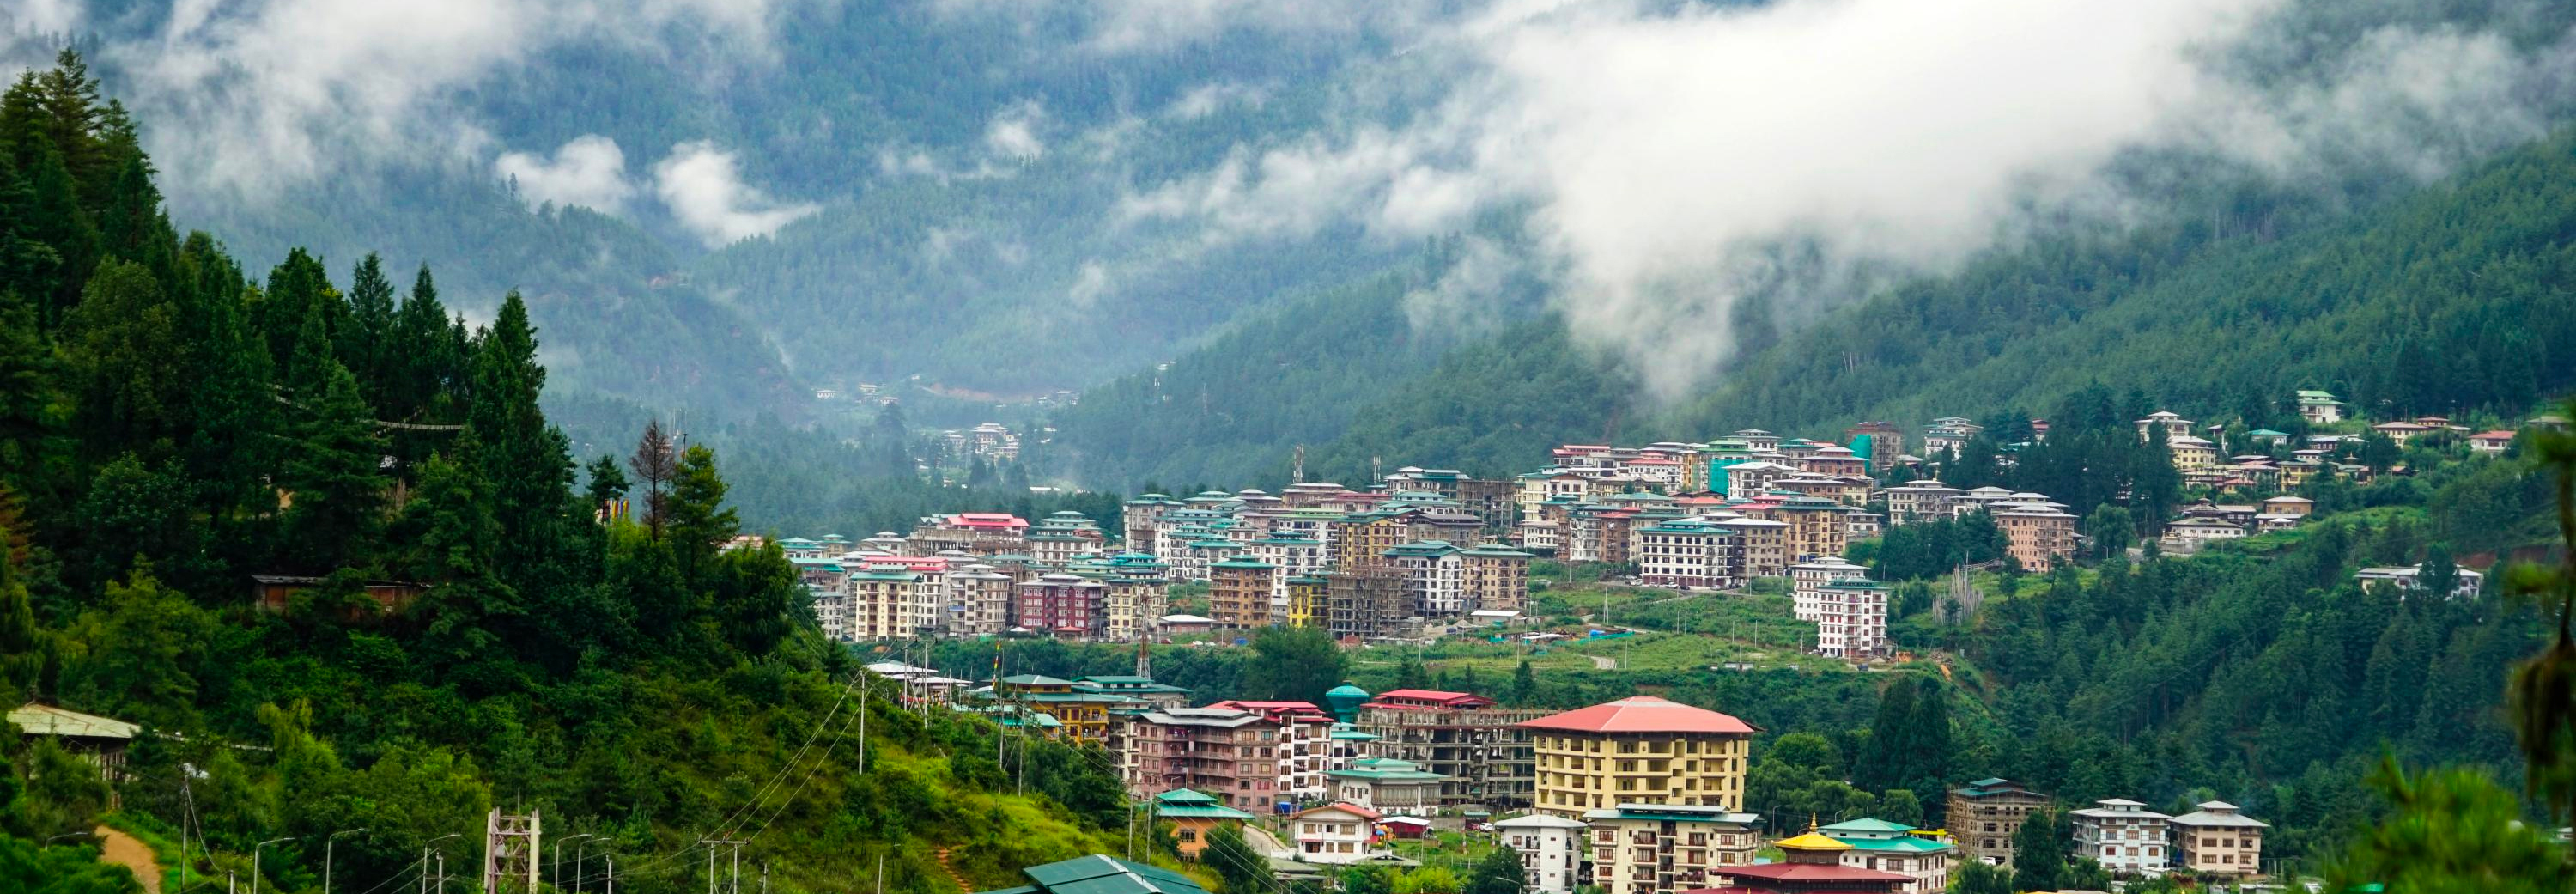 Thimphu, Bhutan 